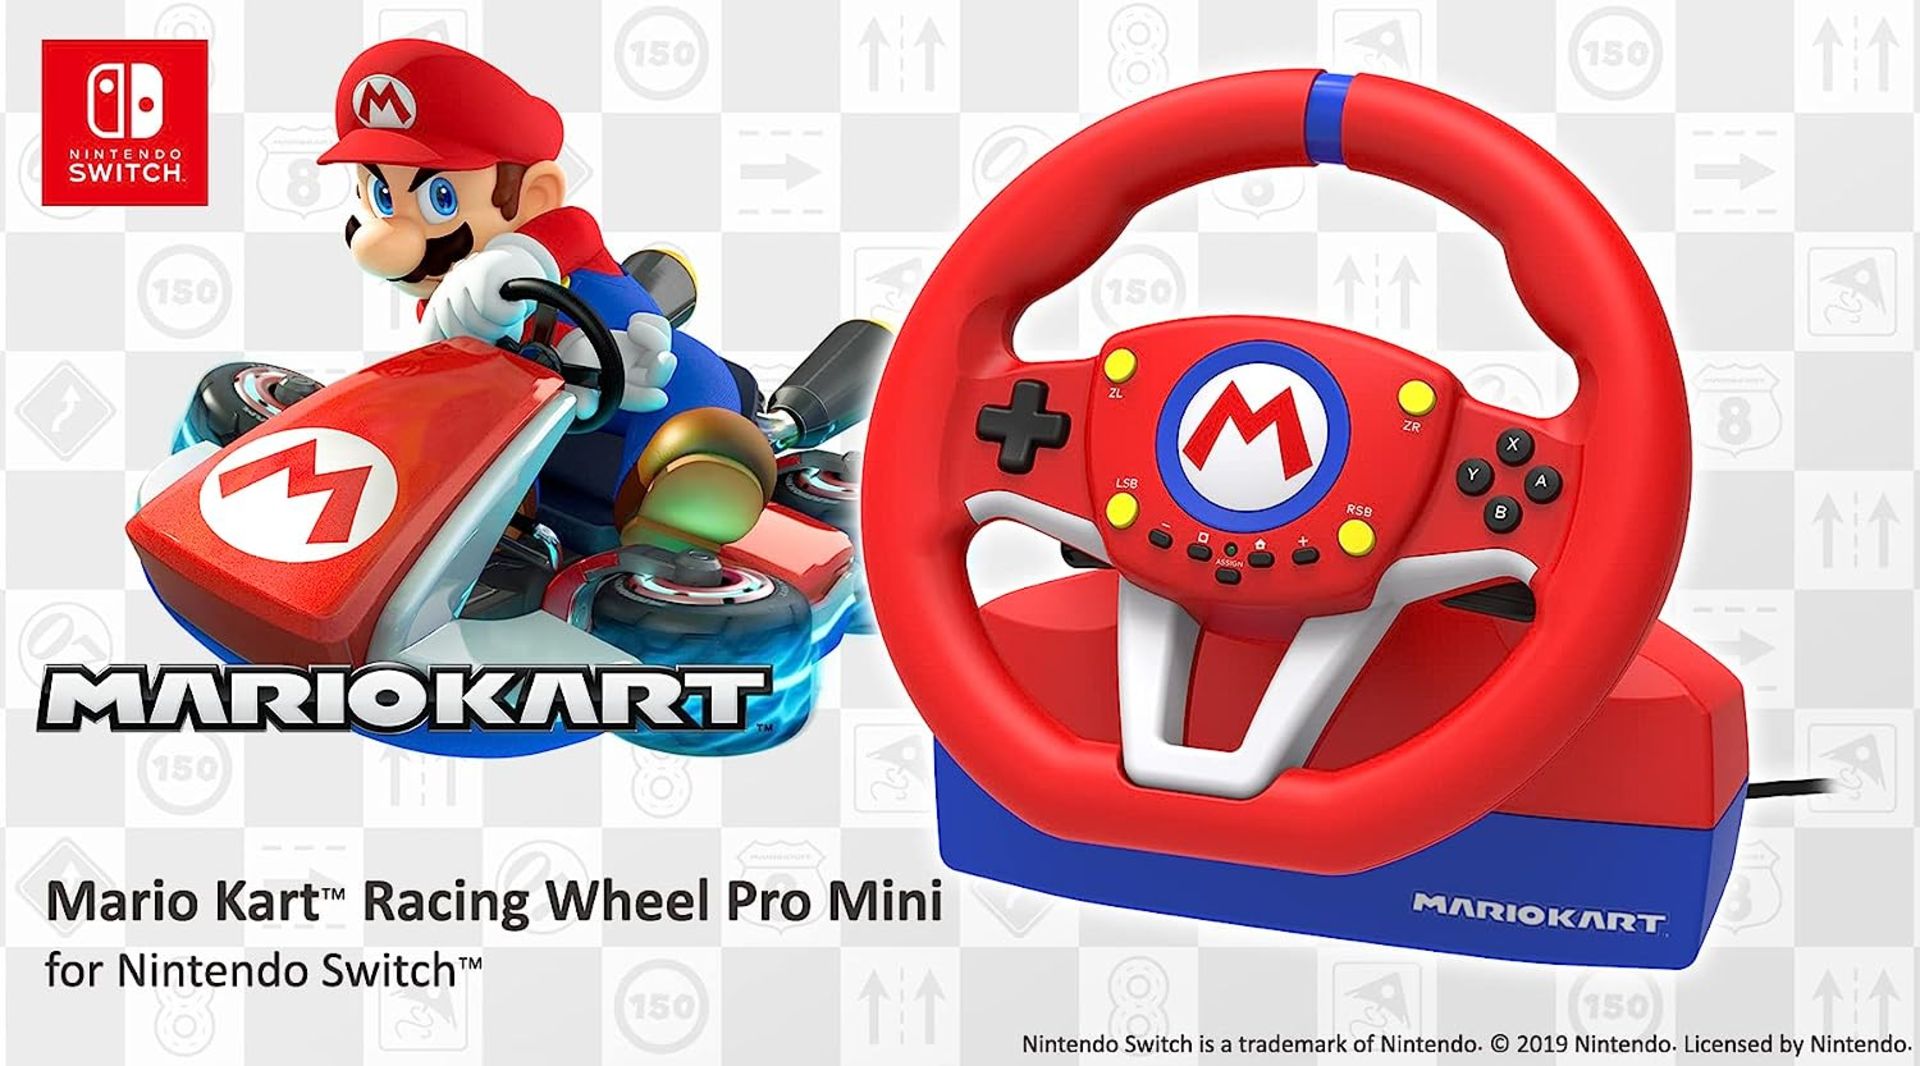 RAW RETURN - 5 x HORI Mario Kart Racing Wheel Pro Mini for Nintendo Switch - RRP NEW WOULD BE £325! - Image 9 of 9